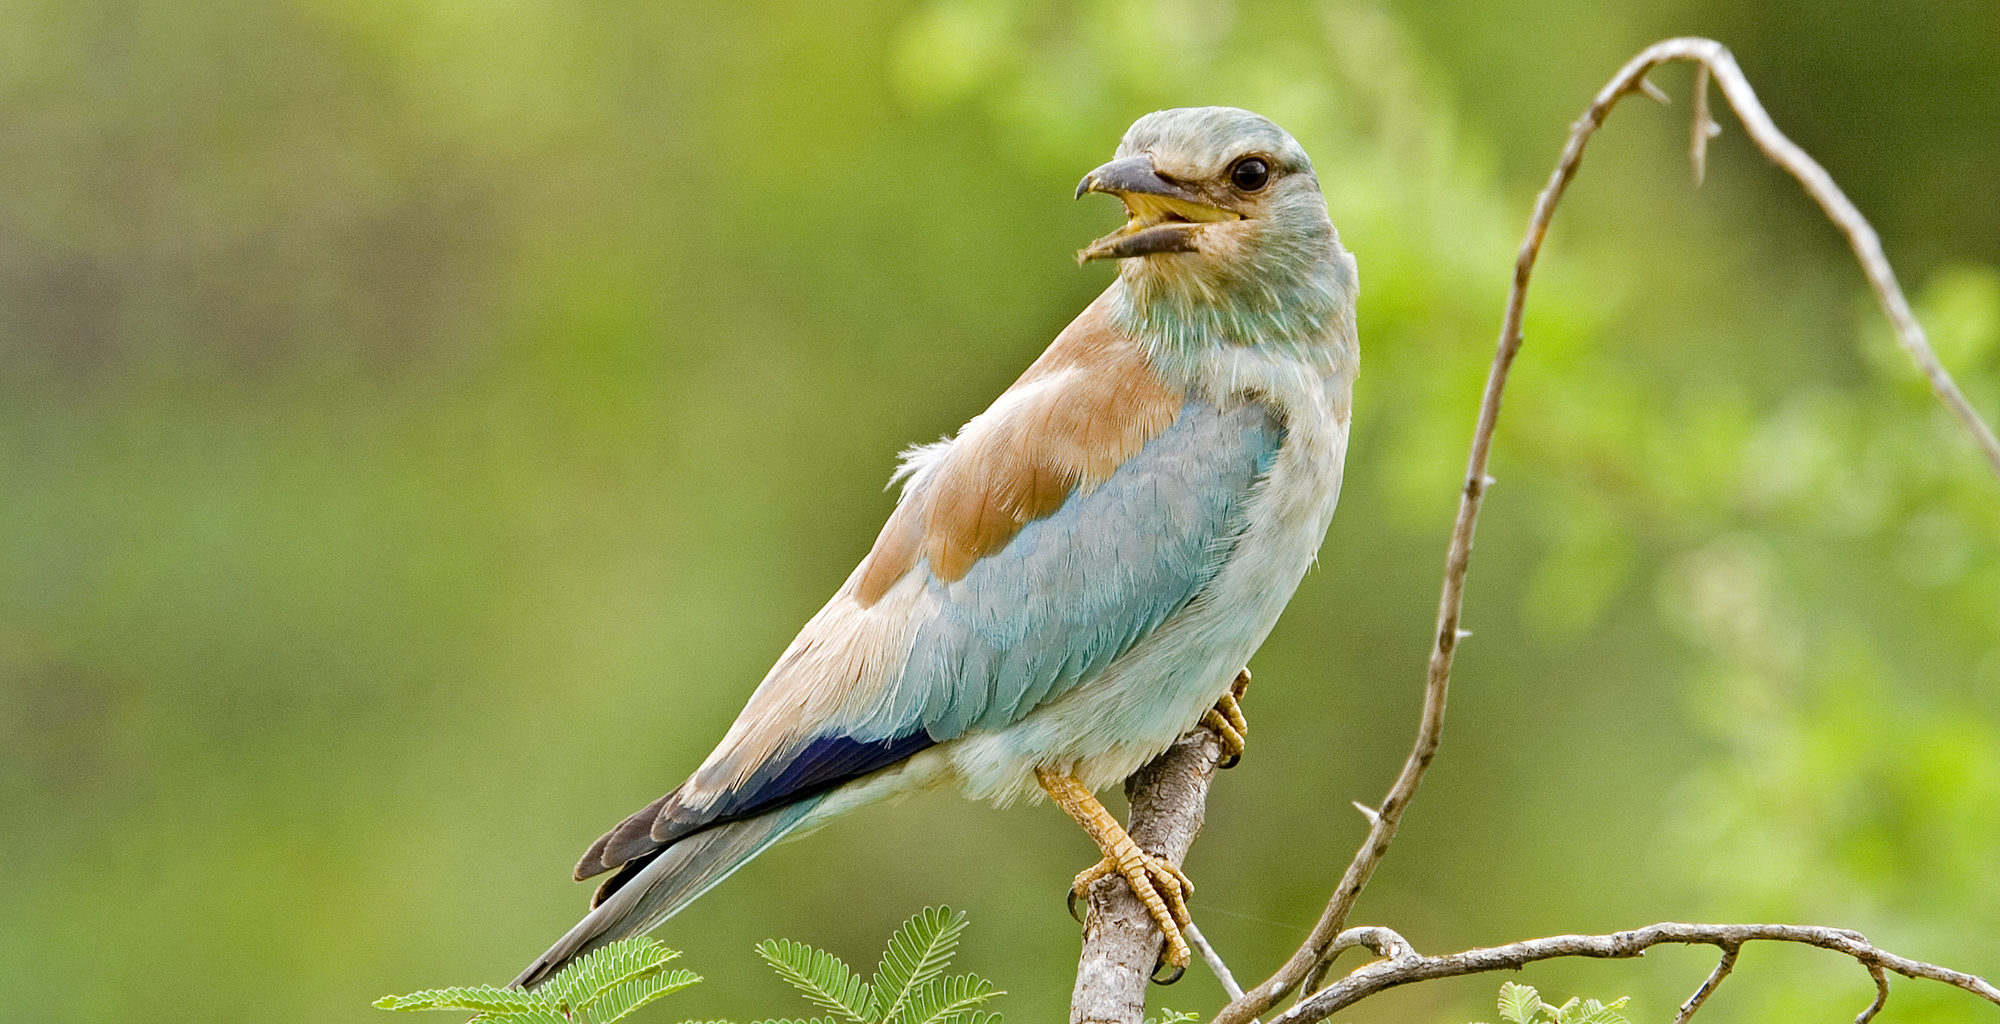 Kenya-Tsavo-East-National-Park-European-Roller-Bird